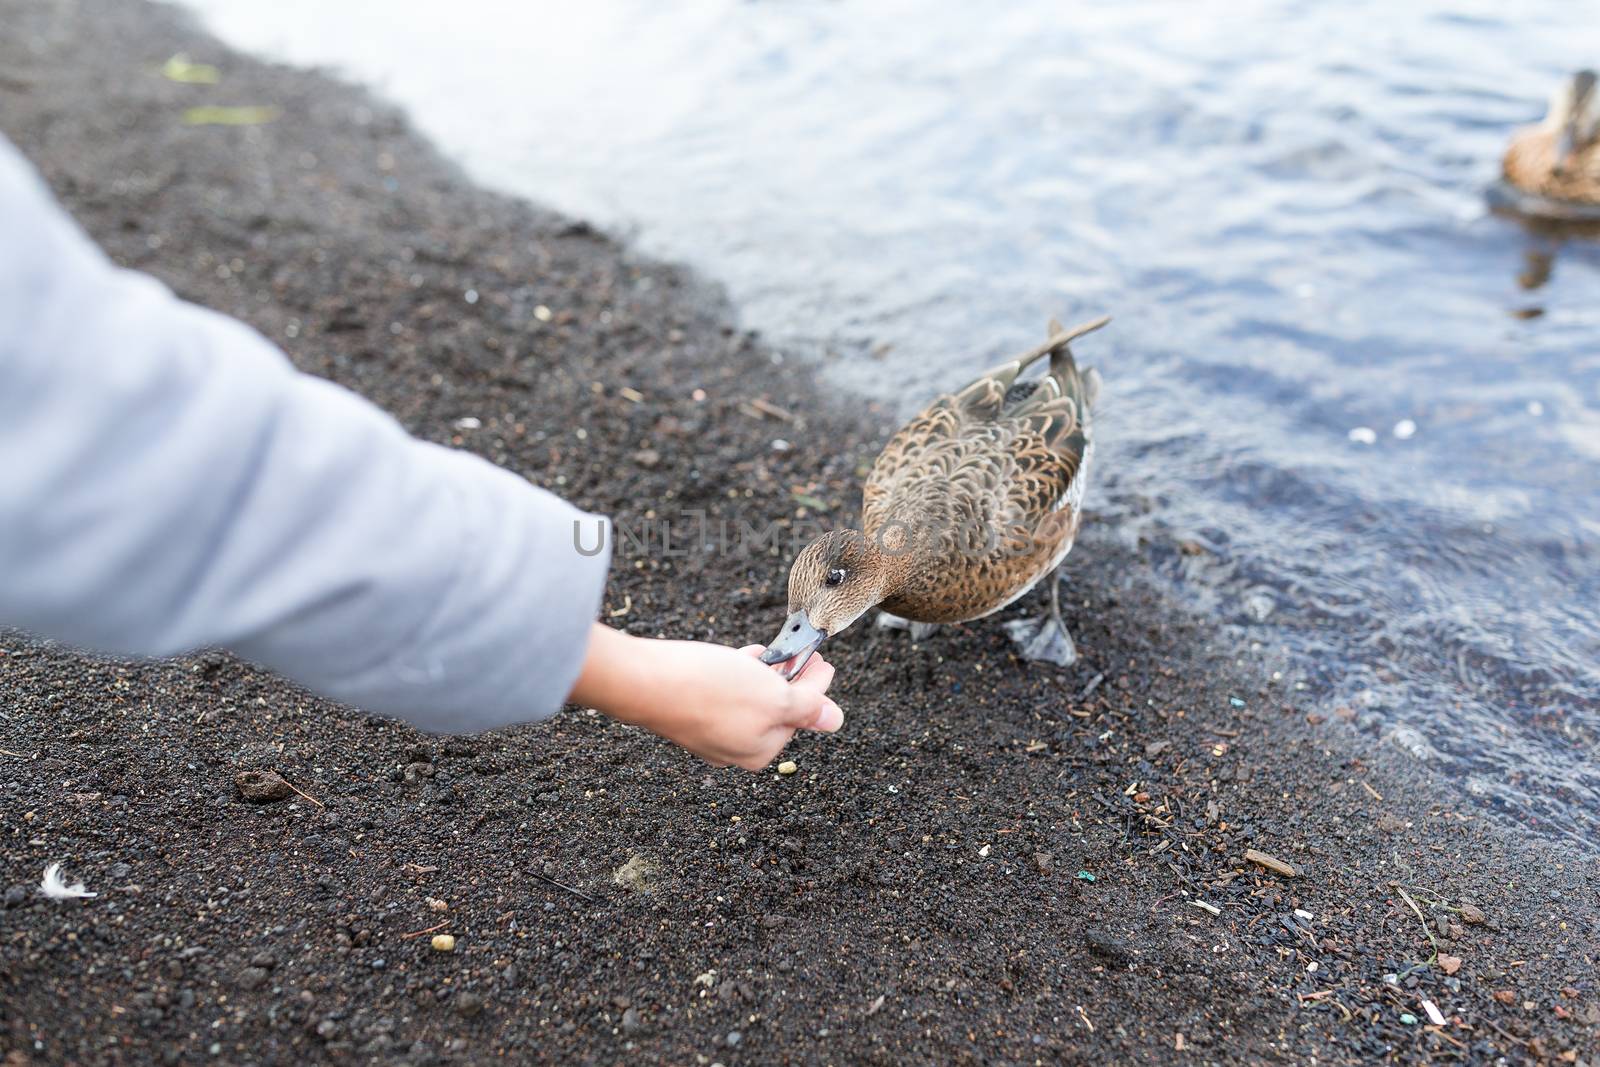 Feeding duck at lake side by leungchopan